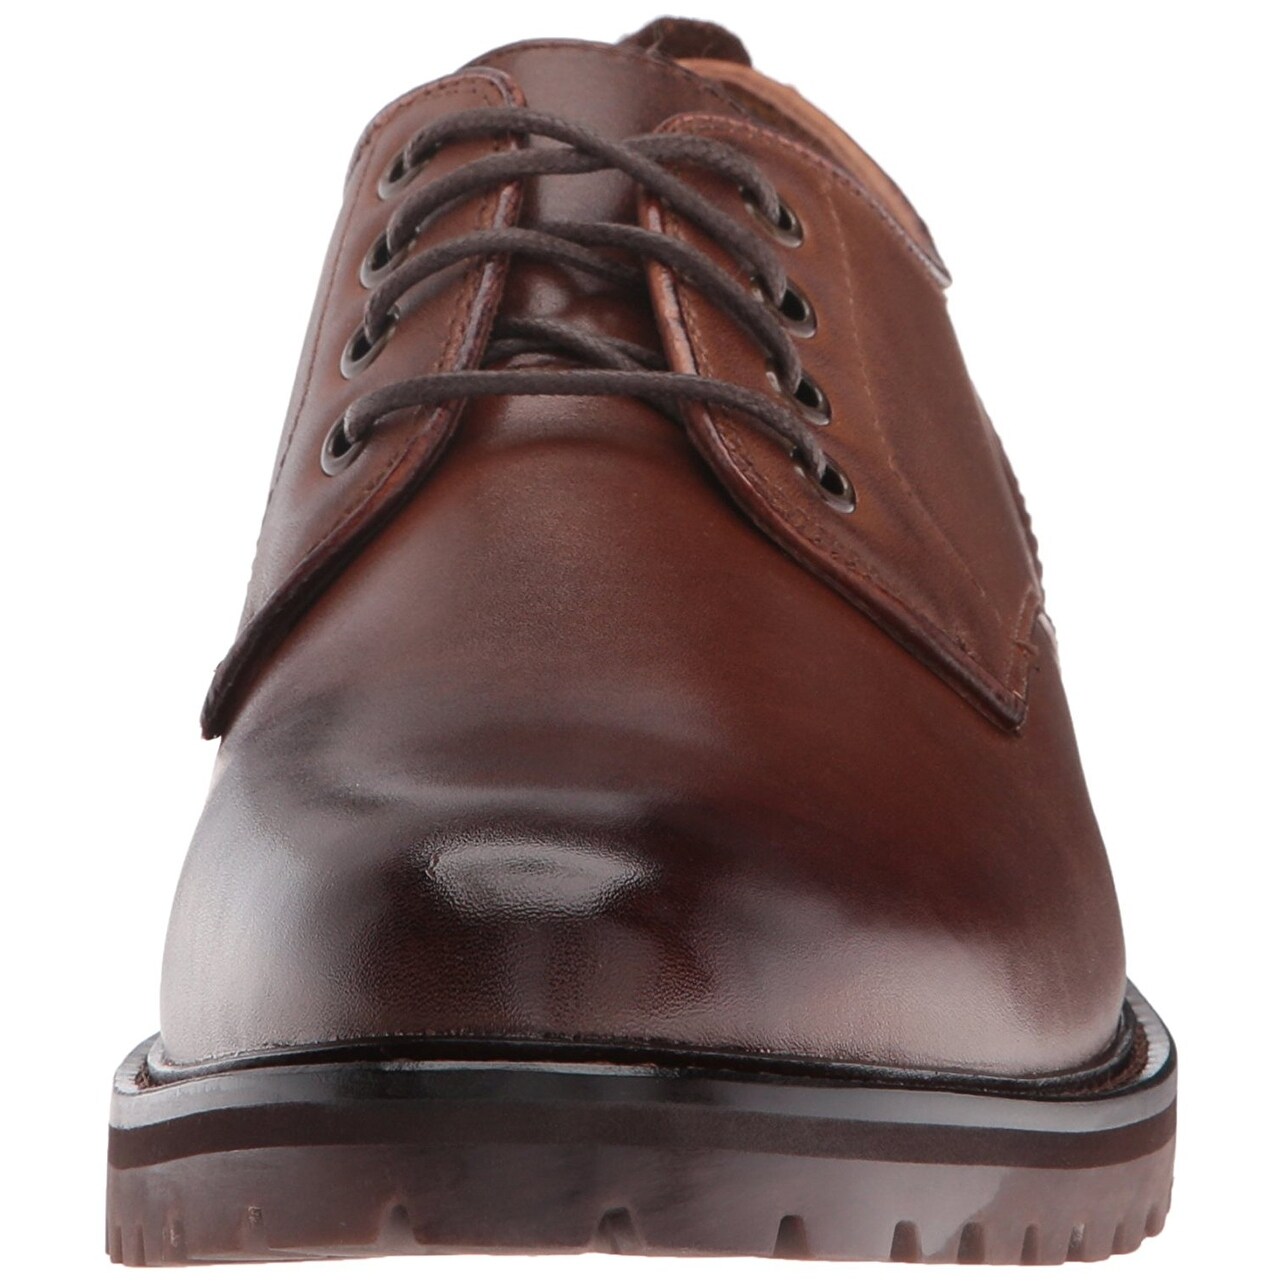 Kimball Shoe, Cognac - Overstock - 17621458